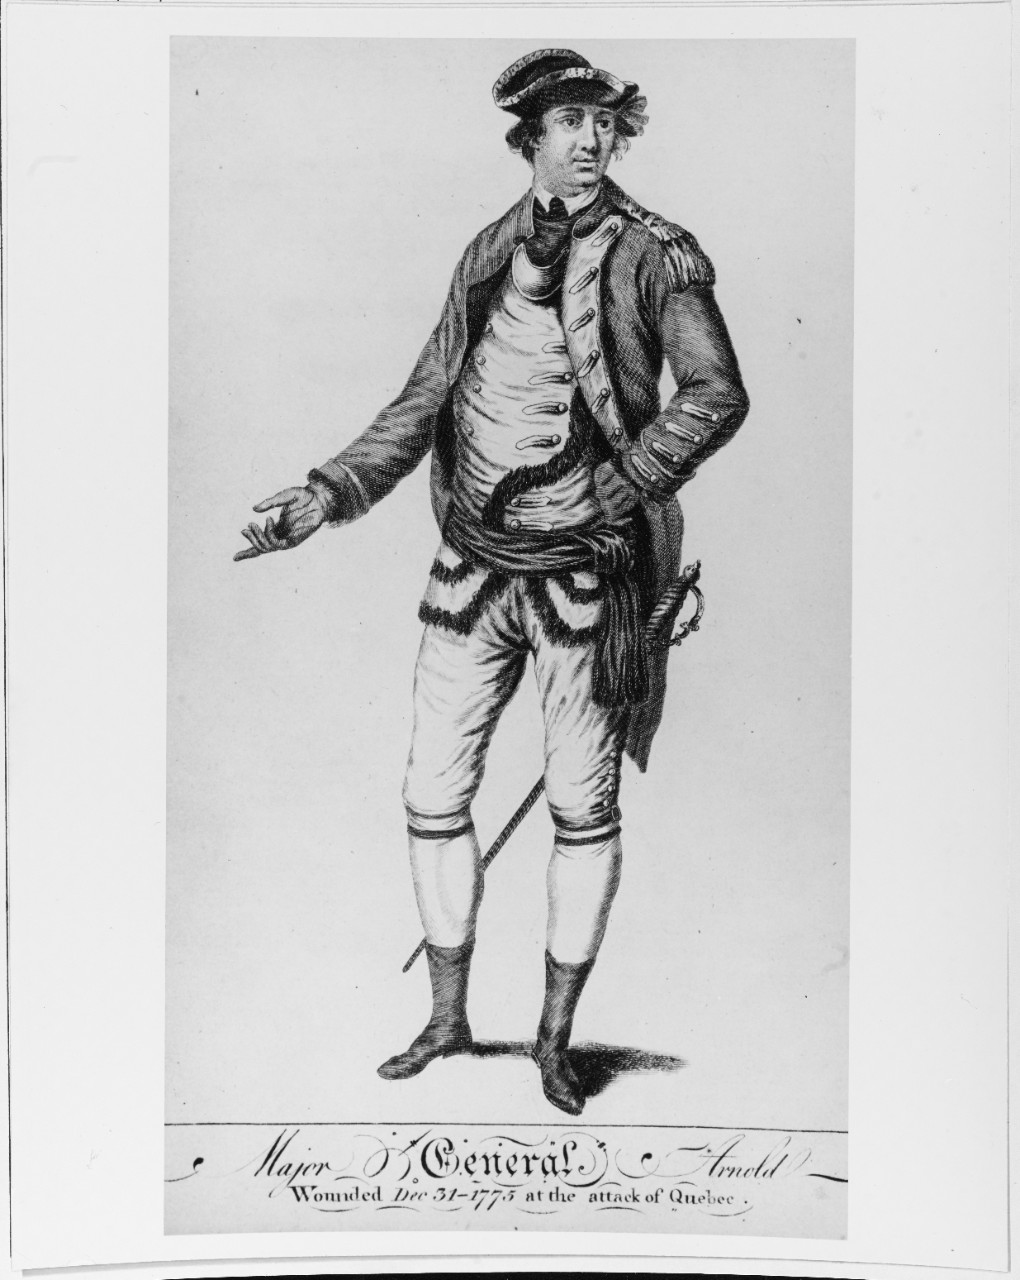 Benedict Arnold (1741-1801), American General